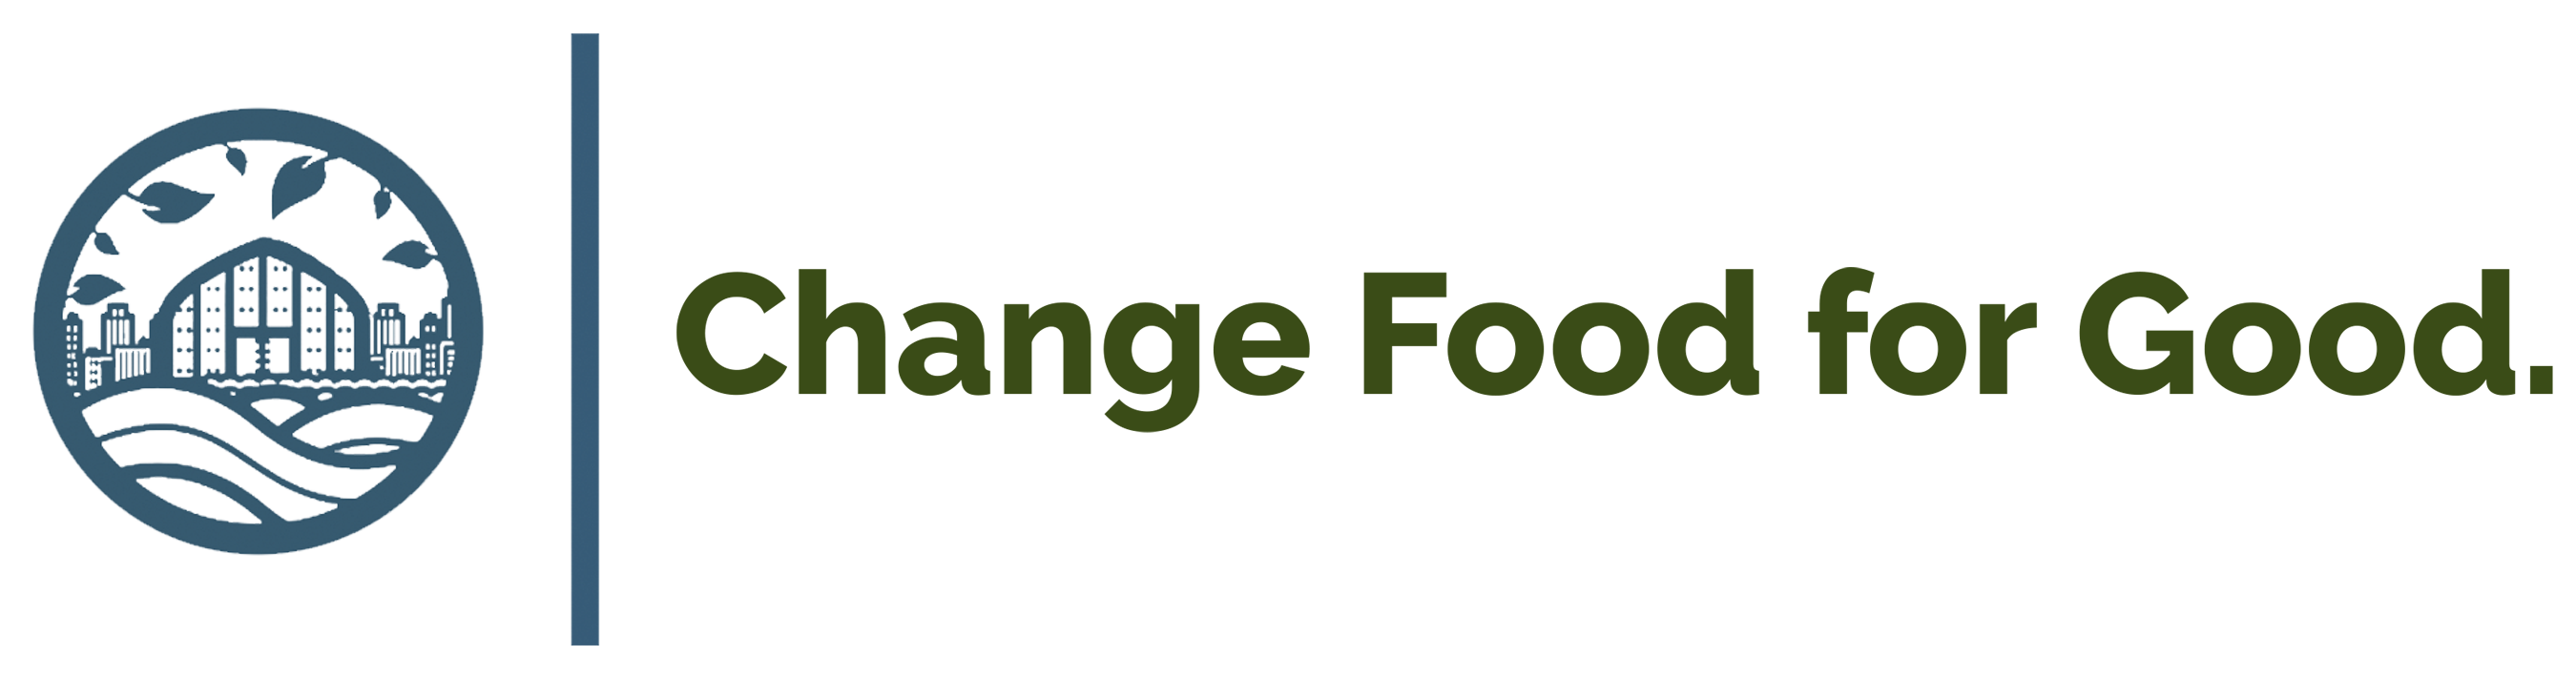 Change Food for Good logo